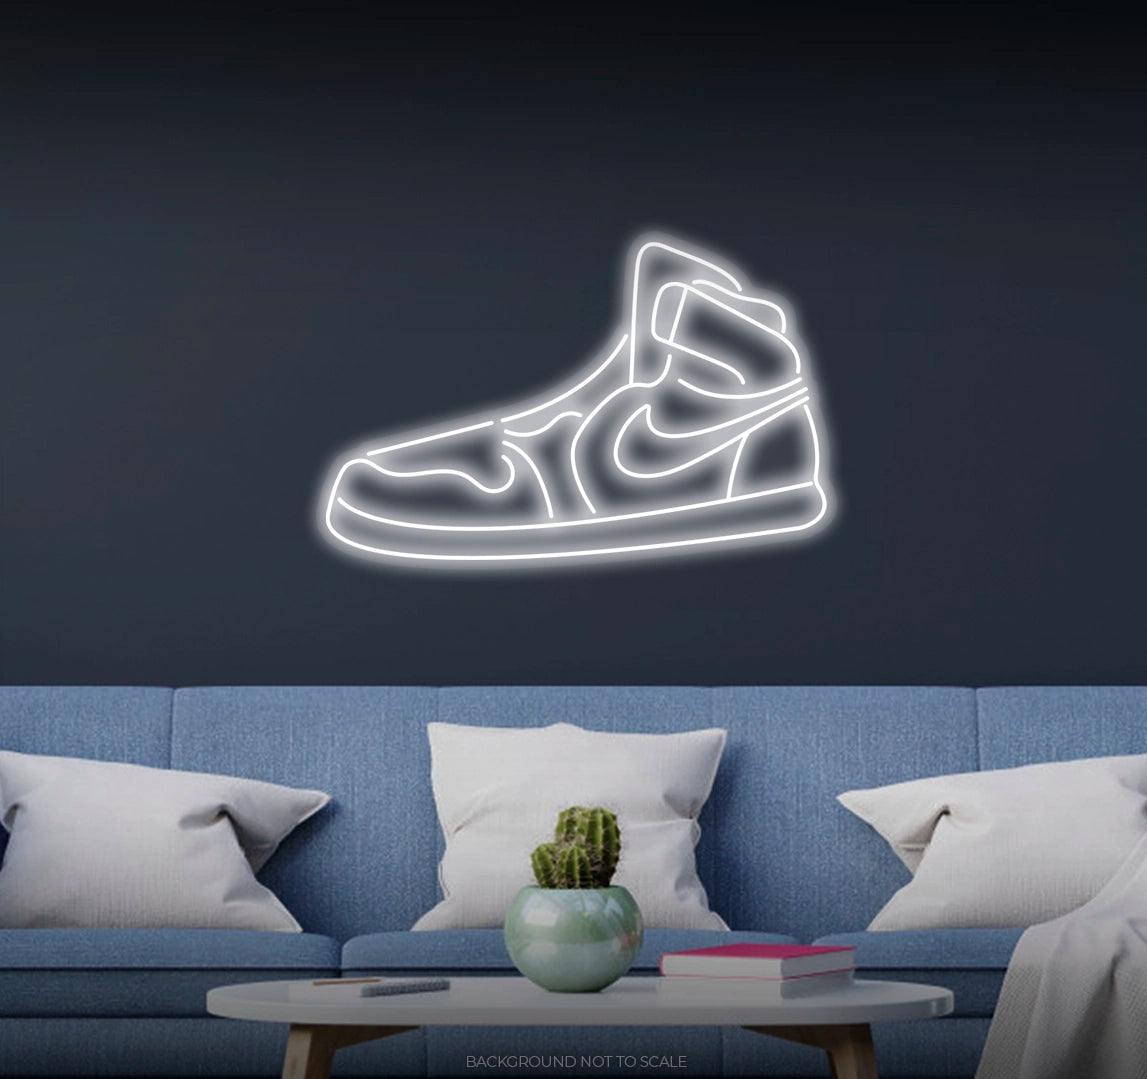 Nike Air Jordan shoe ledneon